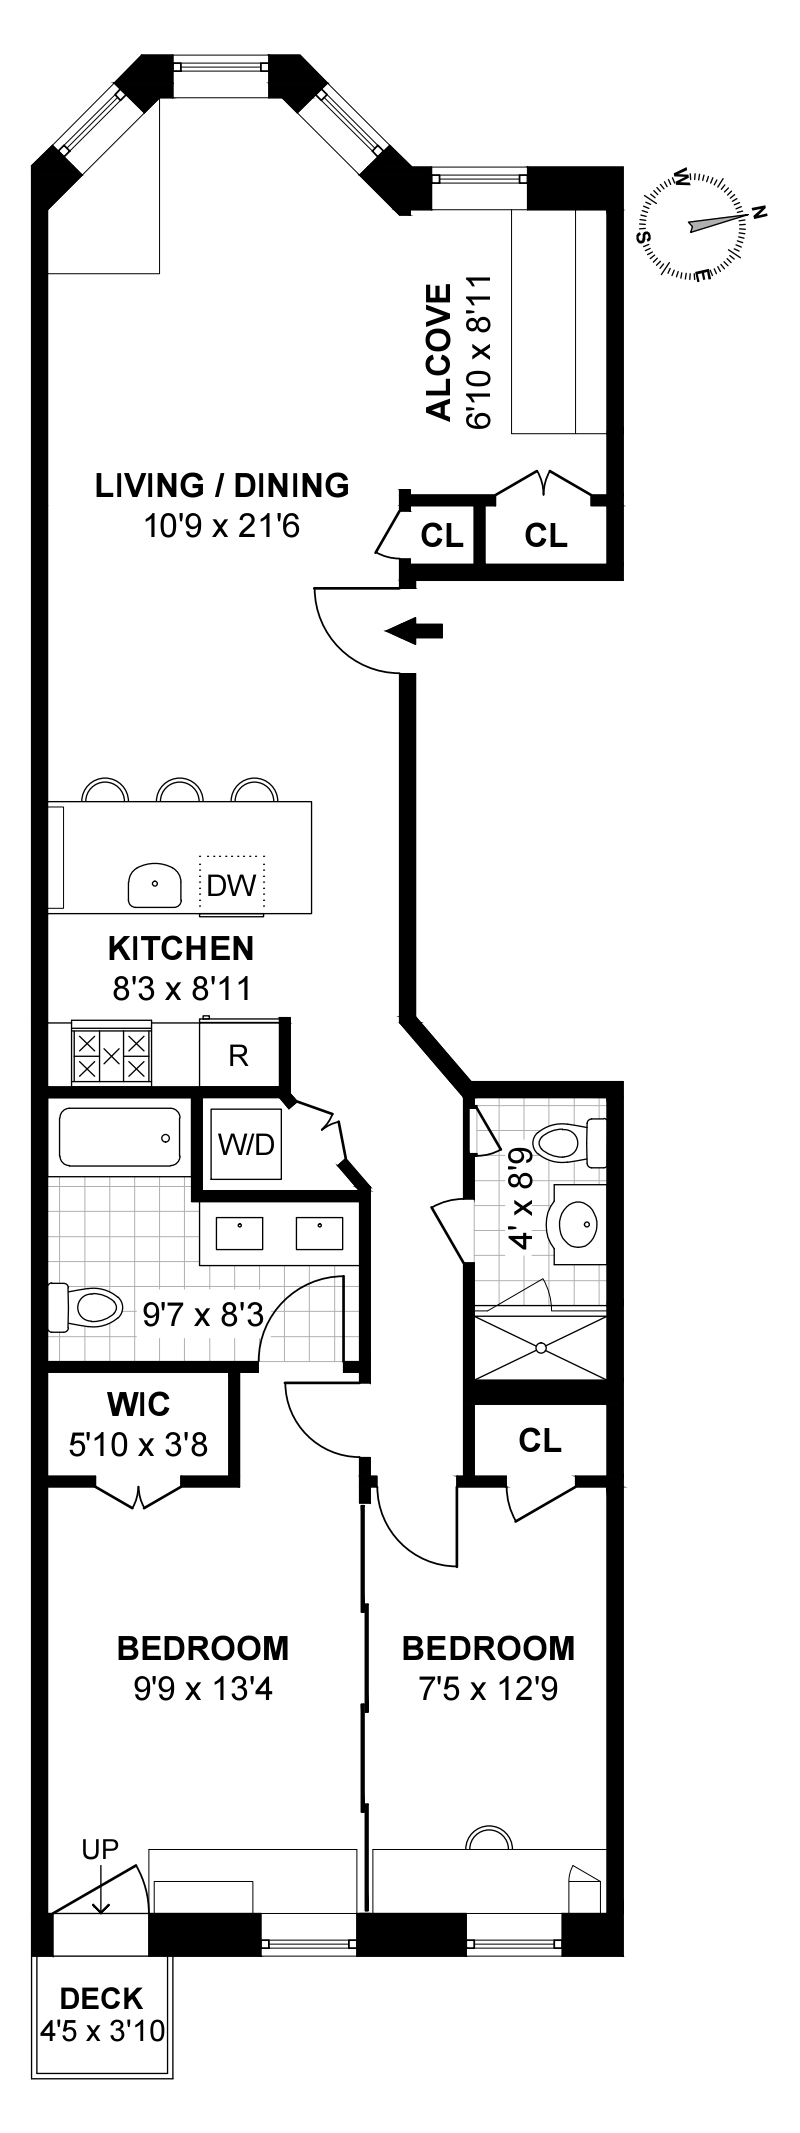 Floorplan for 1015 Eighth Avenue, 3RDFLOOR